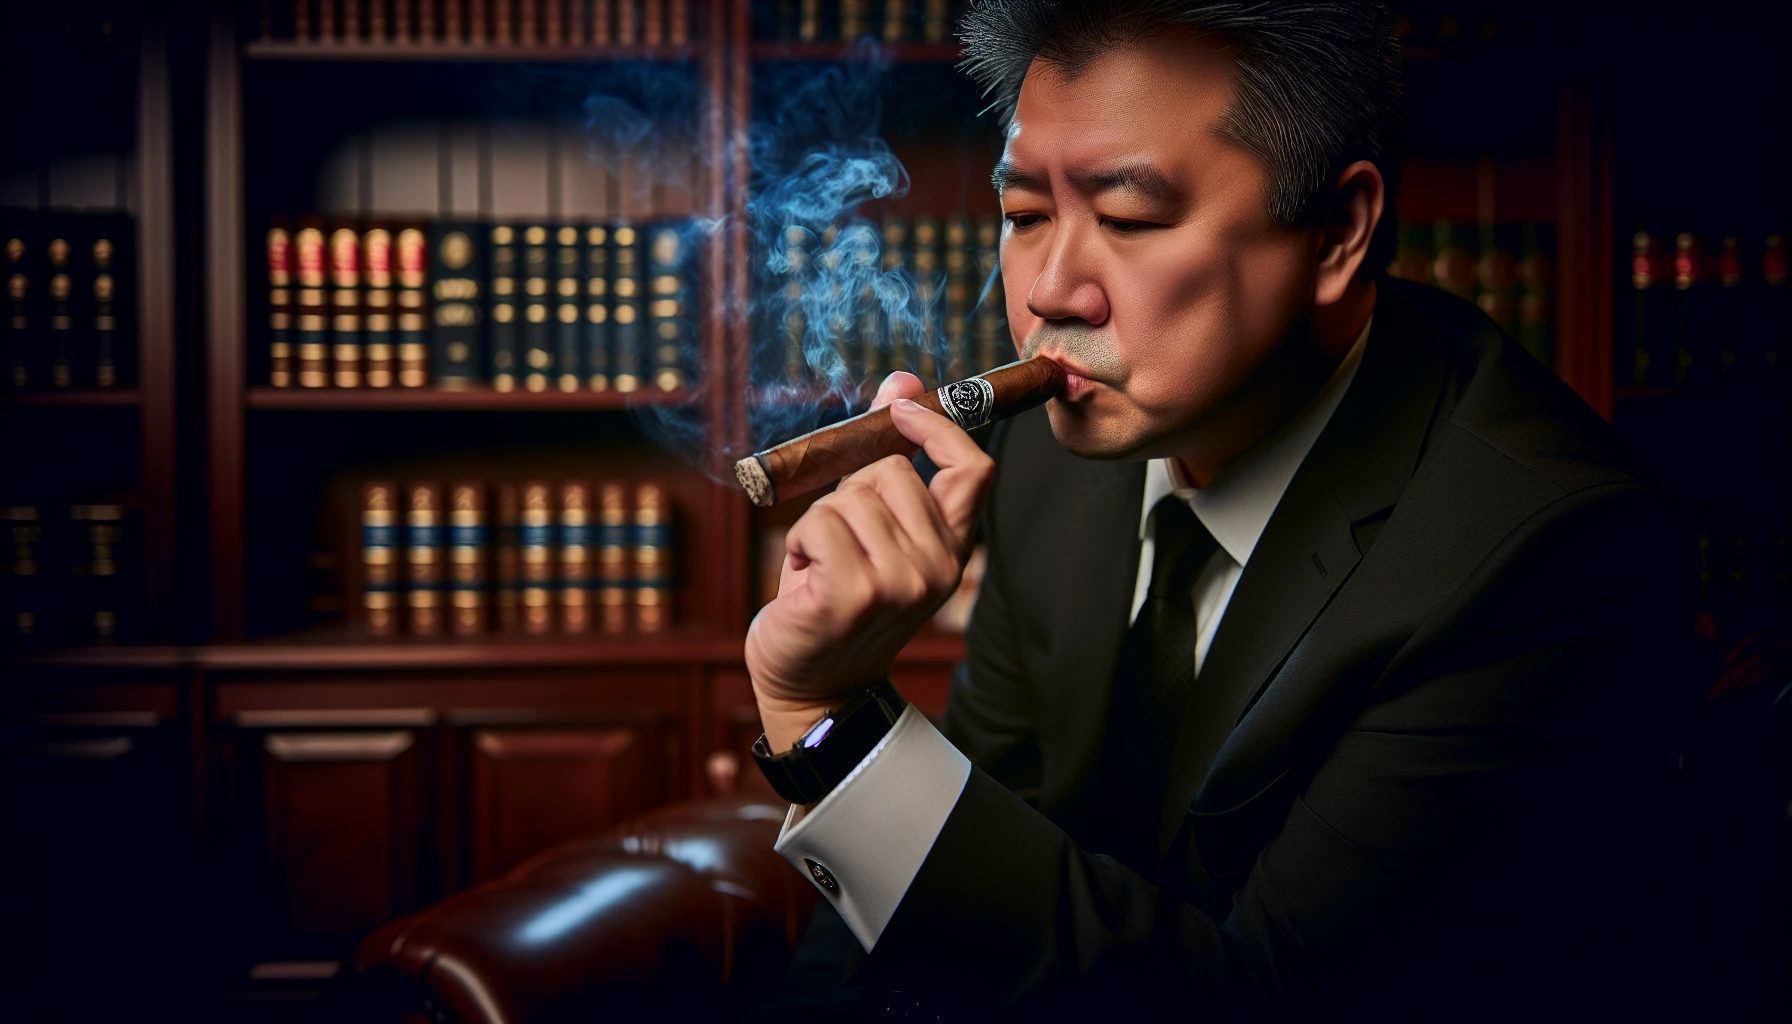 A seasoned cigar enthusiast enjoying a Hoyo de Monterrey Dark Sumatra Media Noche